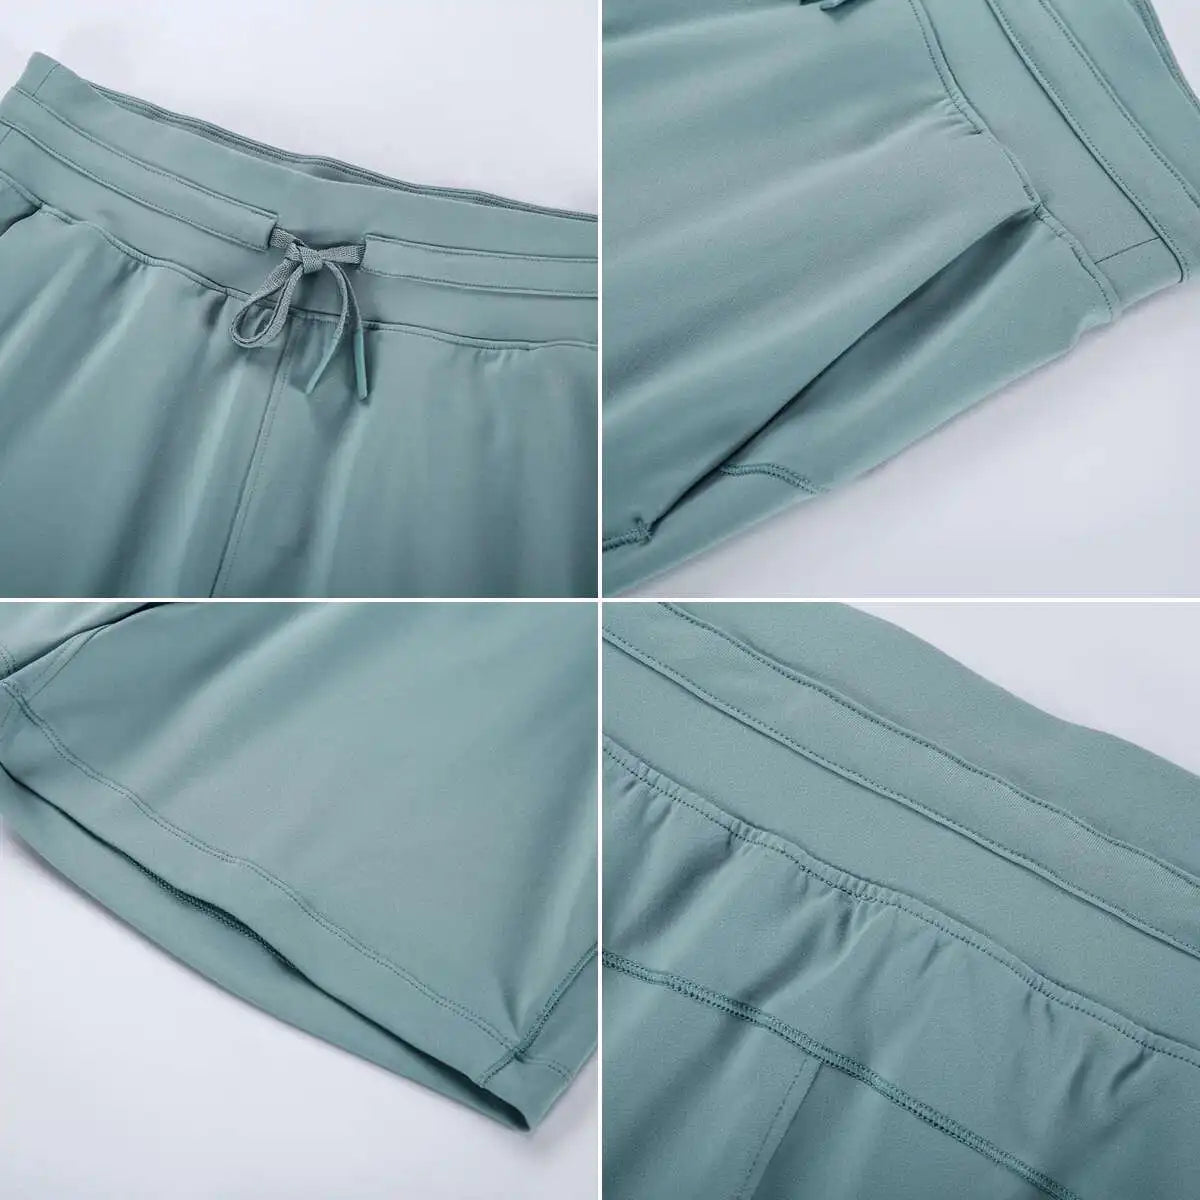 Canmol Summer Drawstring Casual Shorts with Pockets